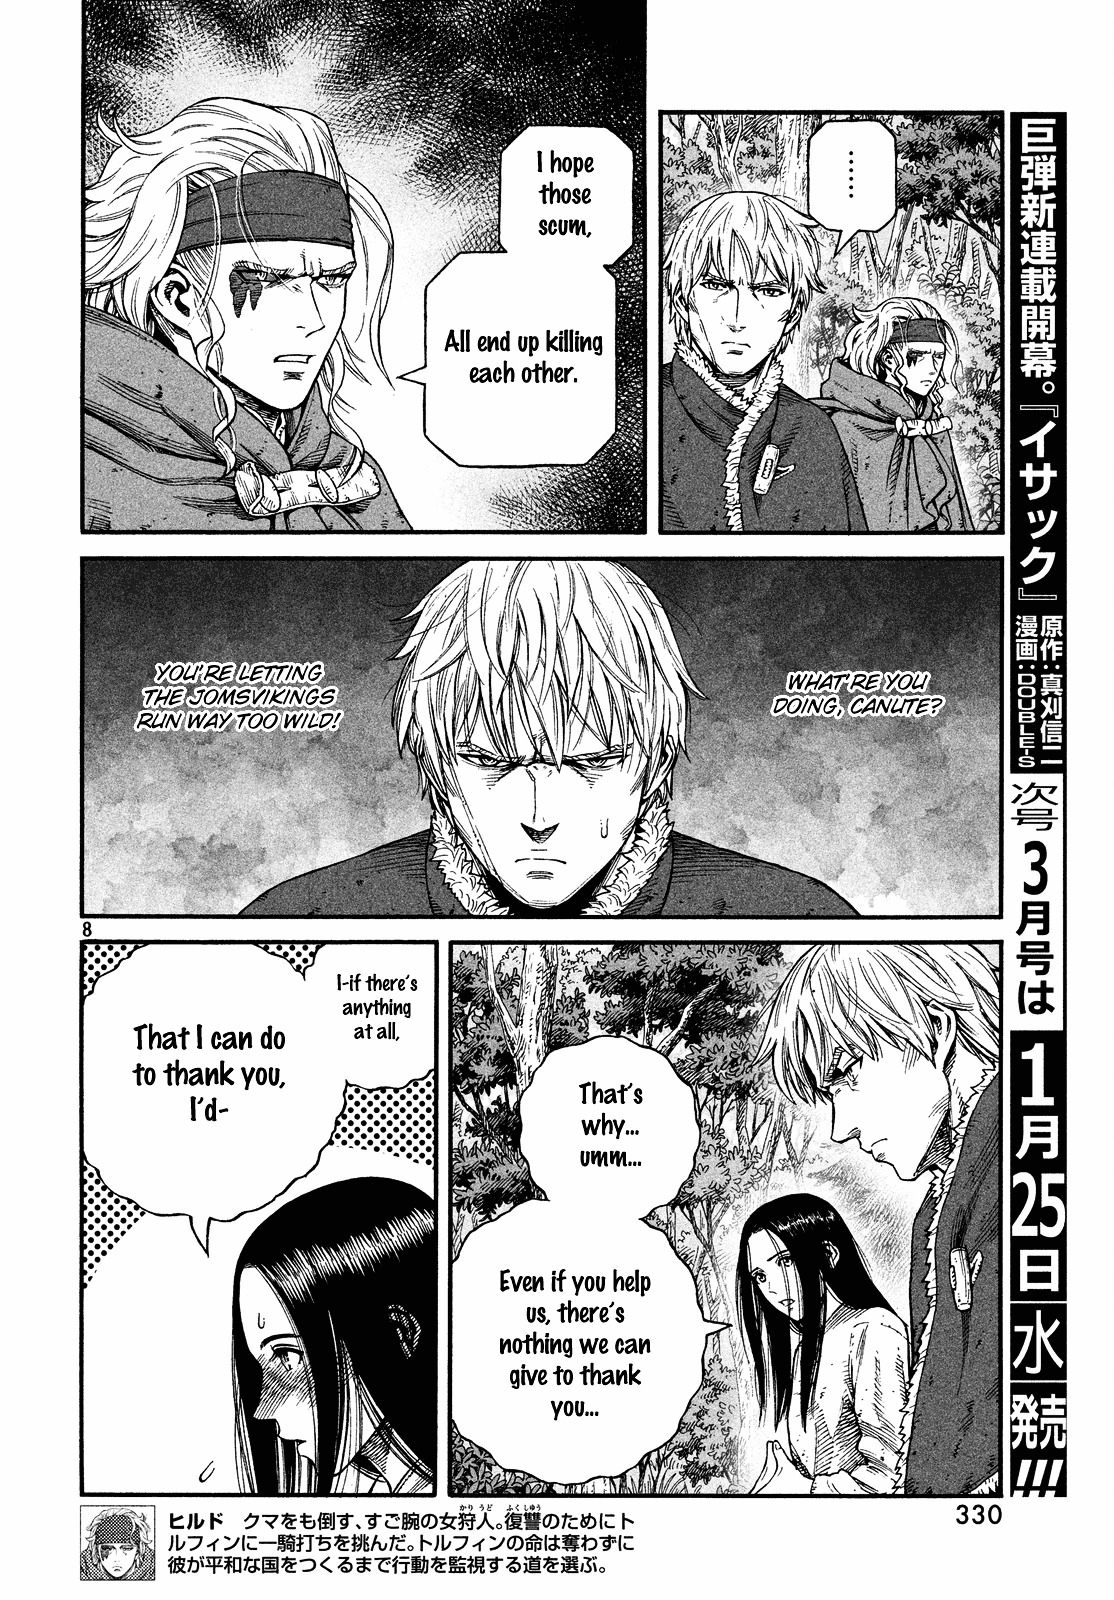 Vinland Saga Manga Manga Chapter - 134 - image 9